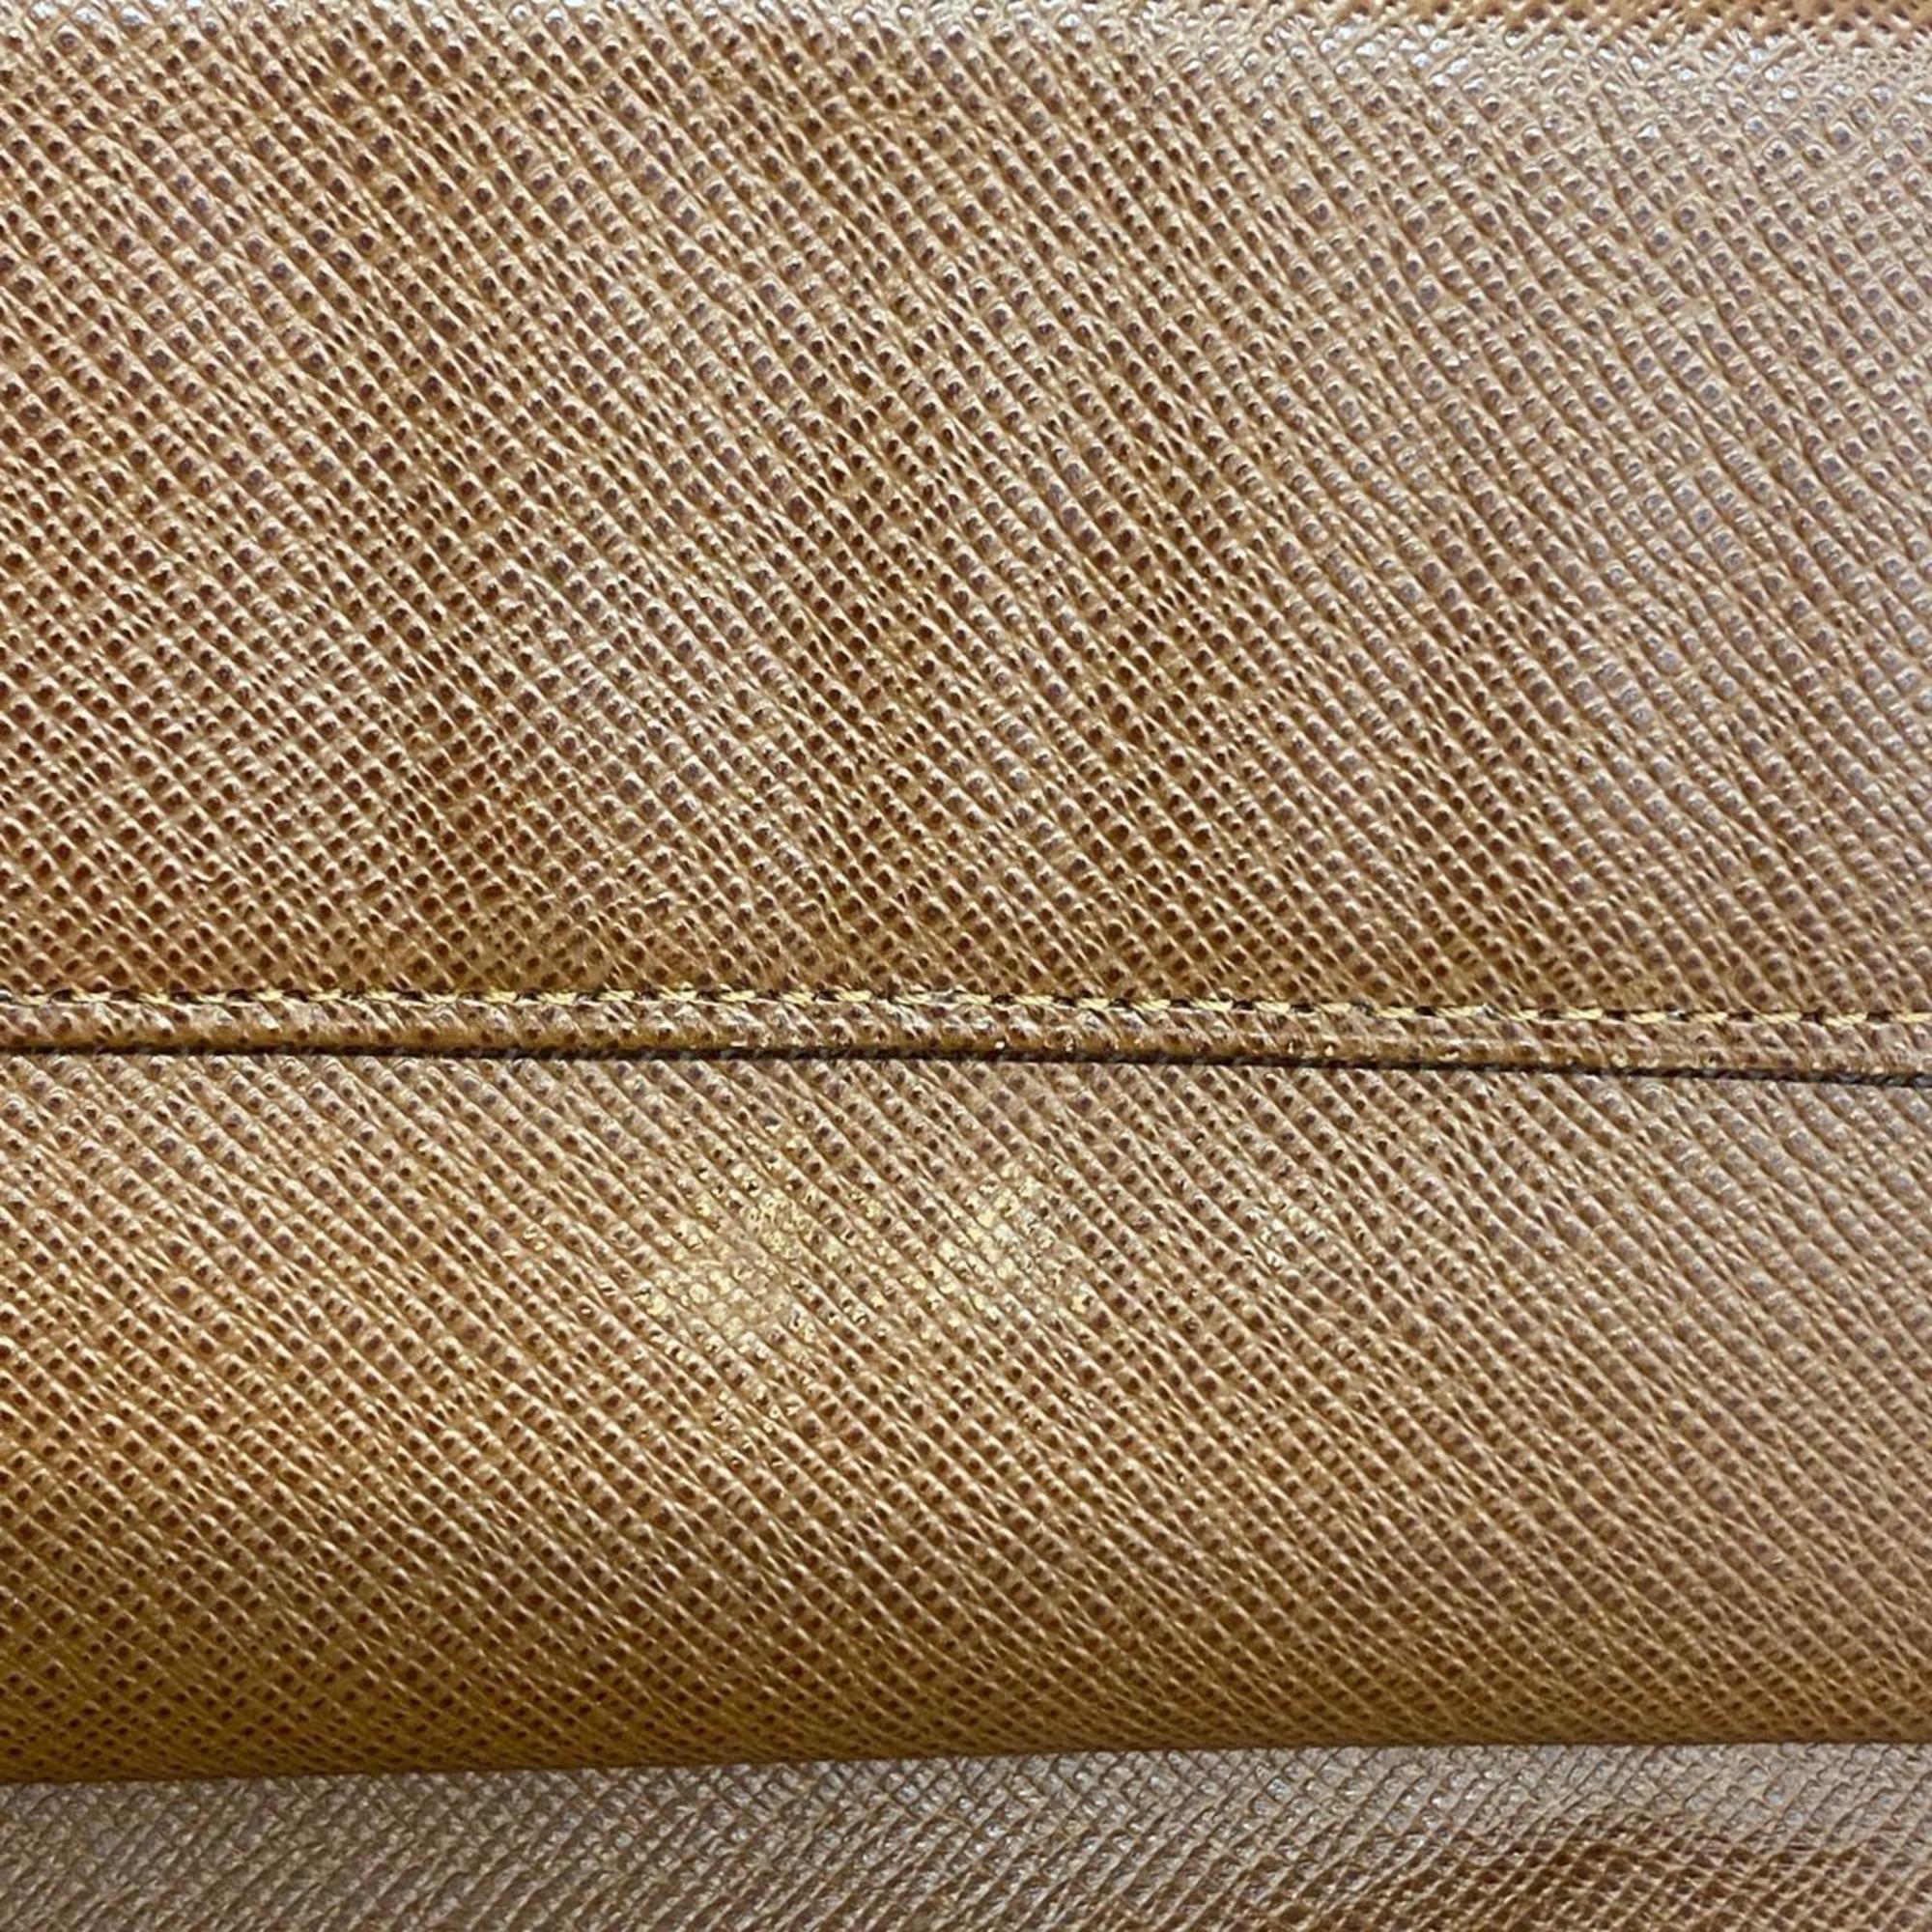 Louis Vuitton Tri-fold Wallet Monogram Porte Tresor Etui Papier M61202 Brown Men's Women's